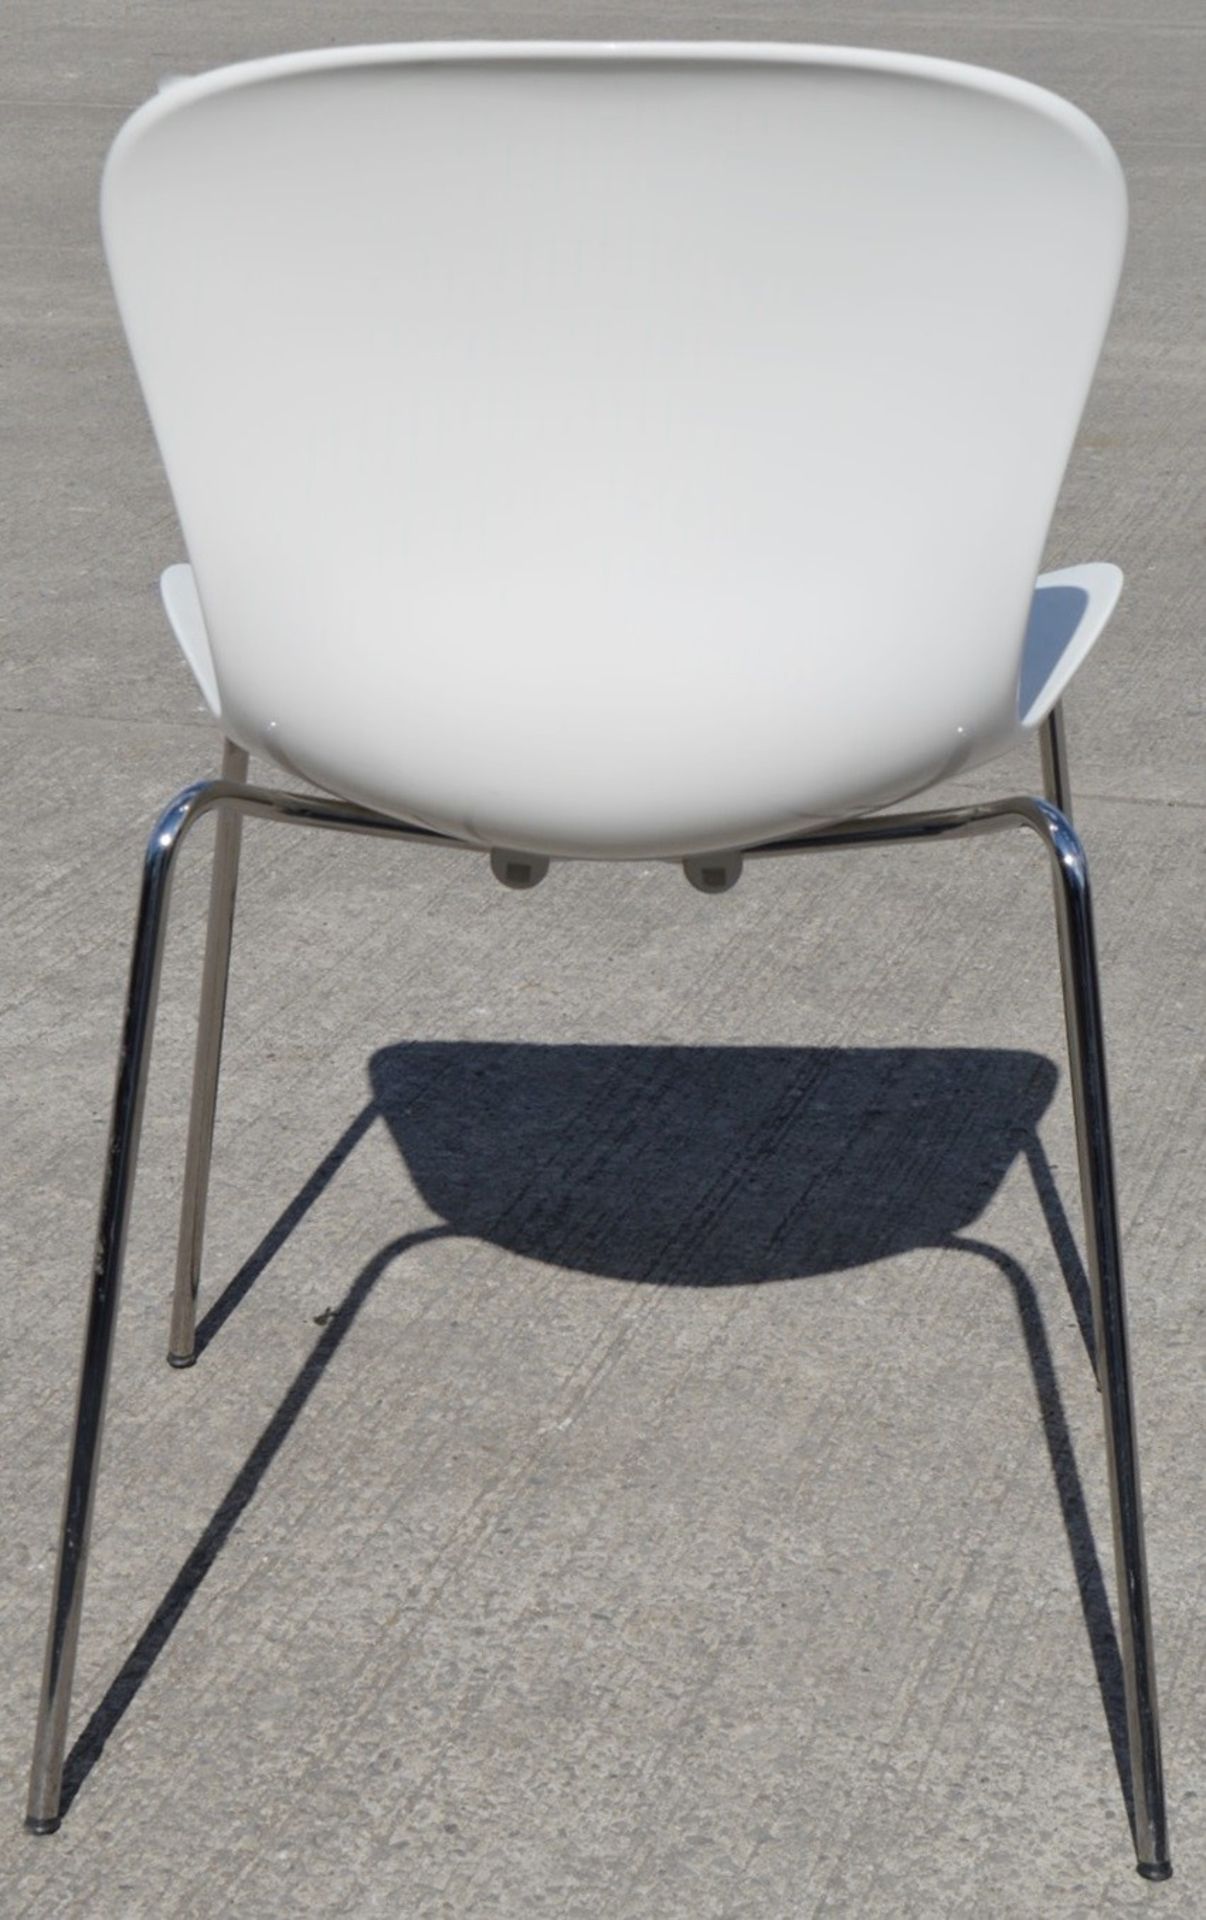 1 x Genuine Fritz Hansen 'Nap' Designer Chair In White & Chrome (KS50) - Dimensions: W48 x D40 x - Image 5 of 6